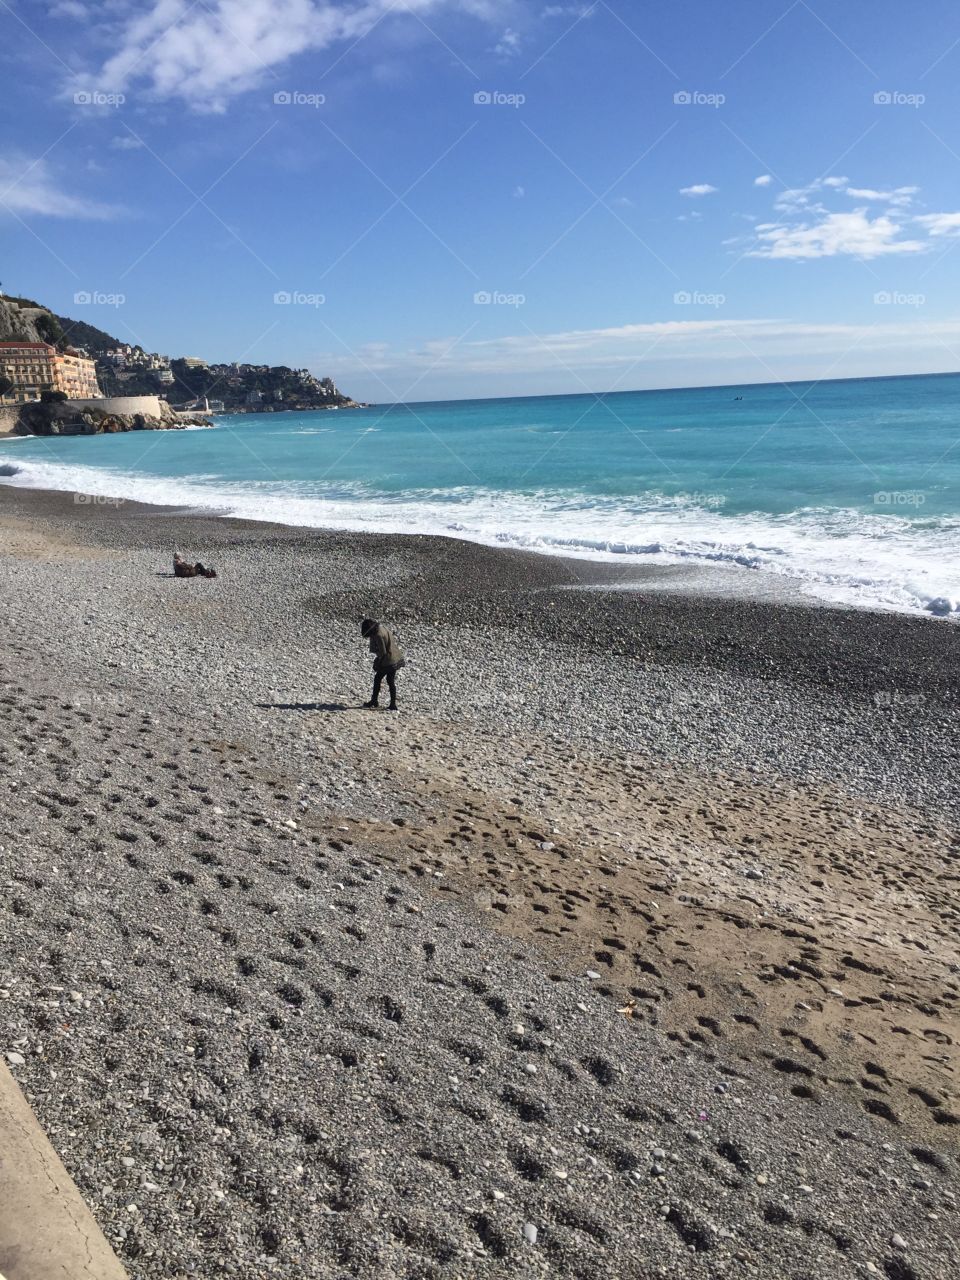 Person walking on sandy beach